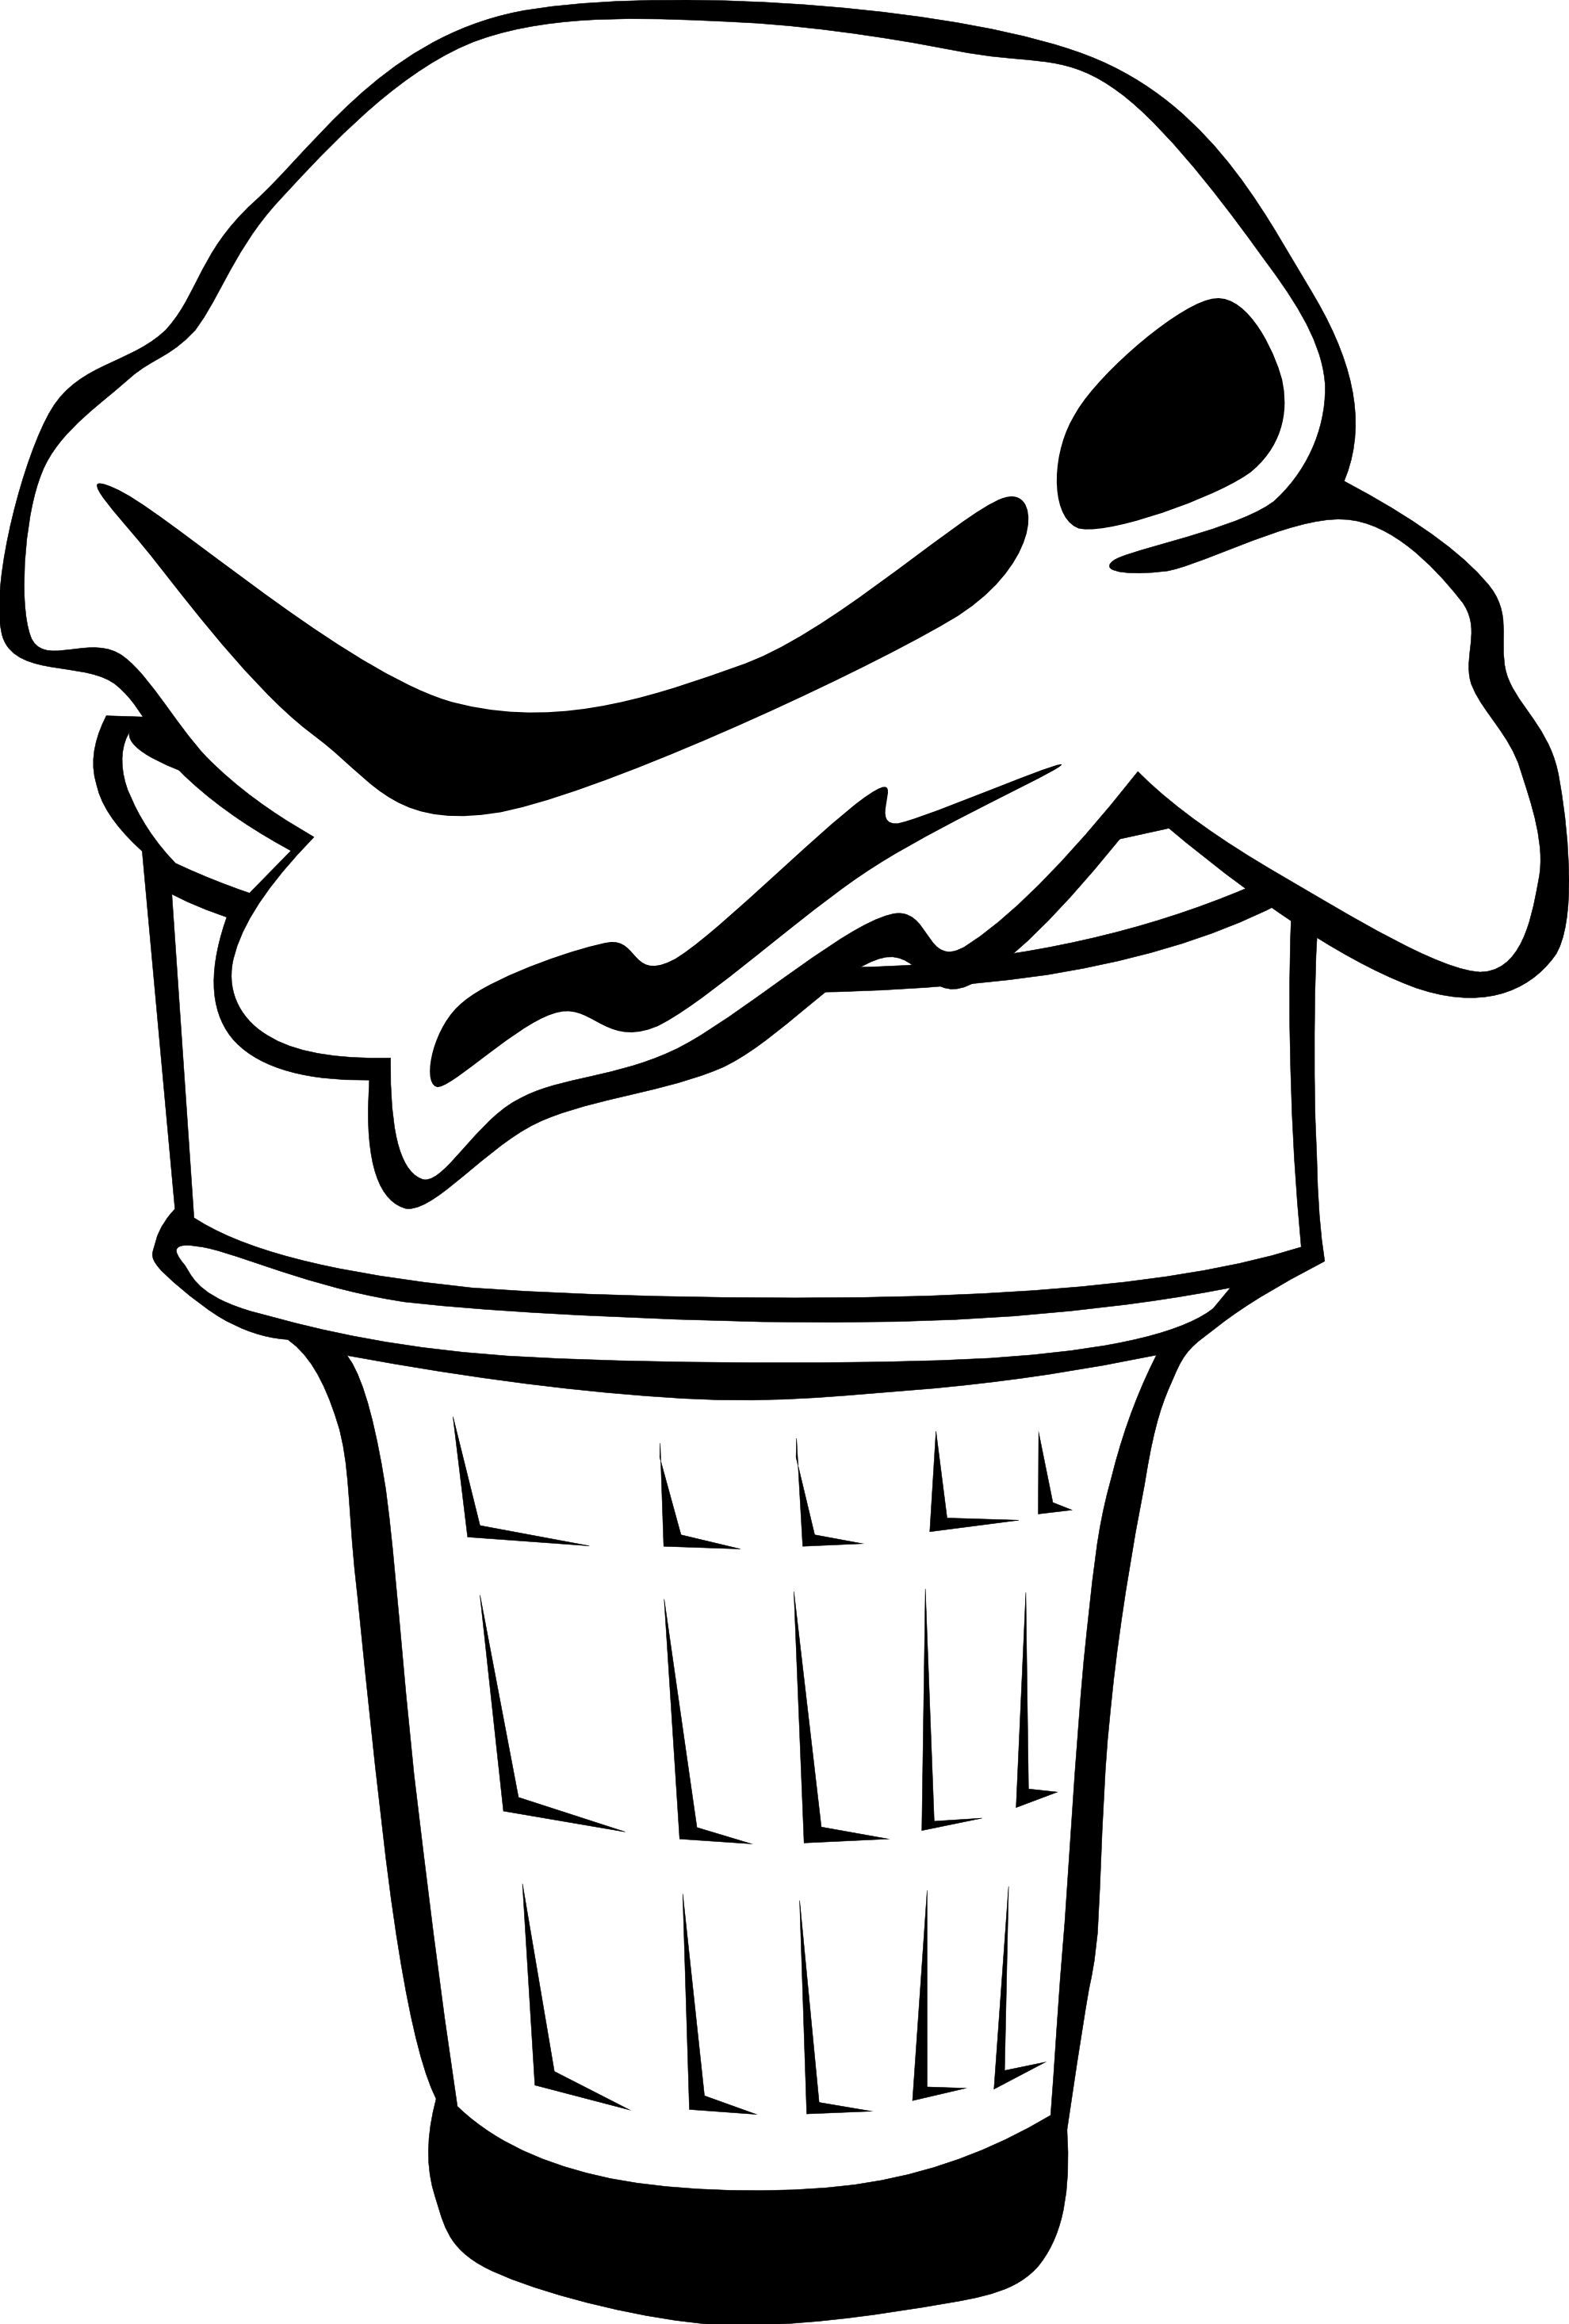 Ice cream black and white ice cream sundae bowl clipart black and ...